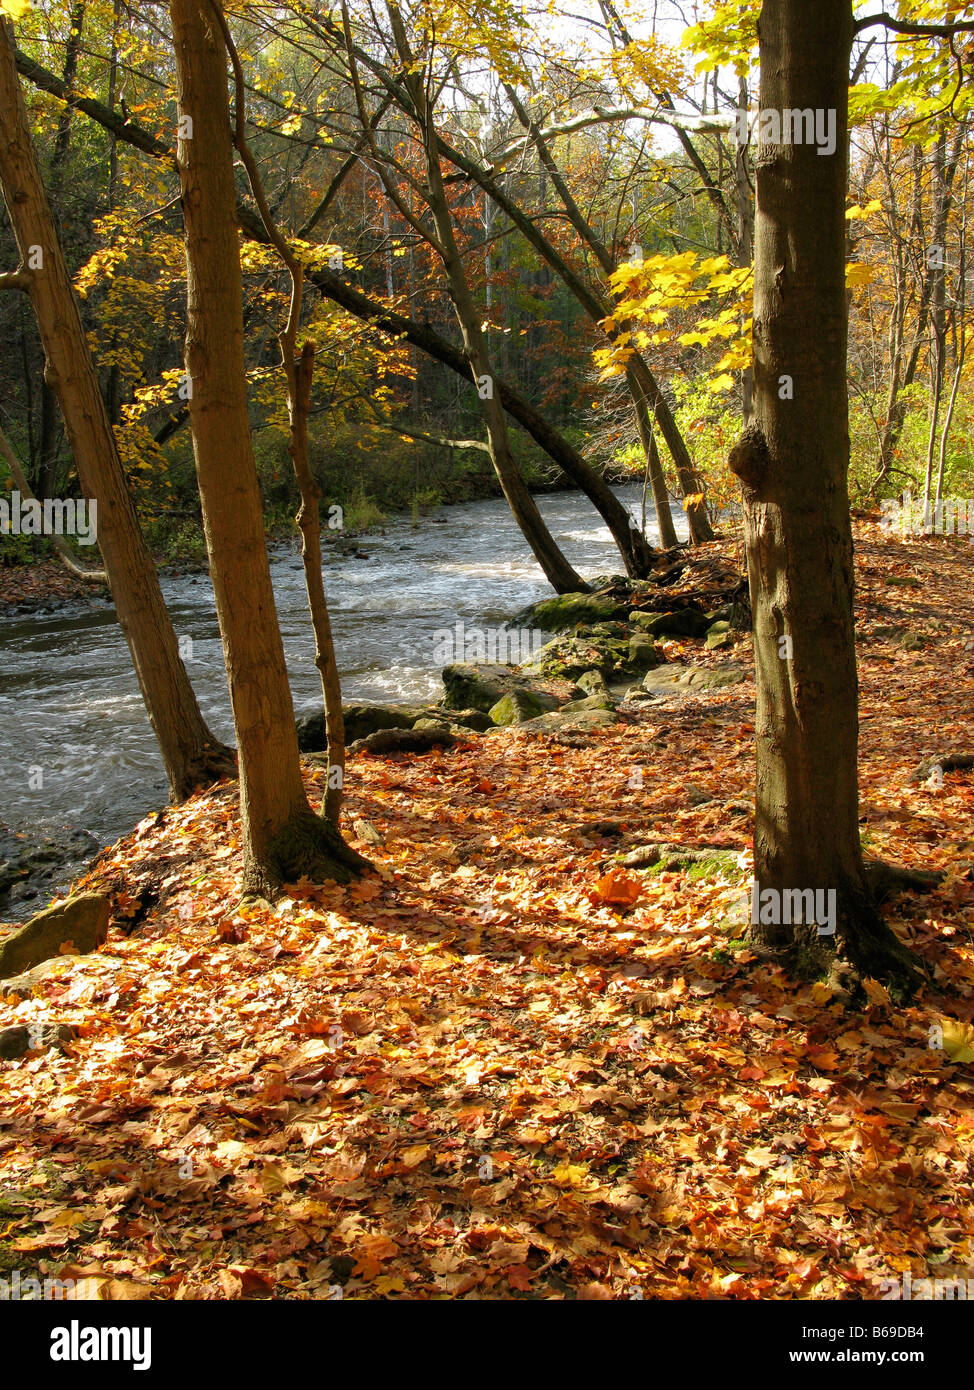 Autumn scene by rushing stream, Penfield NY USA. Stock Photo